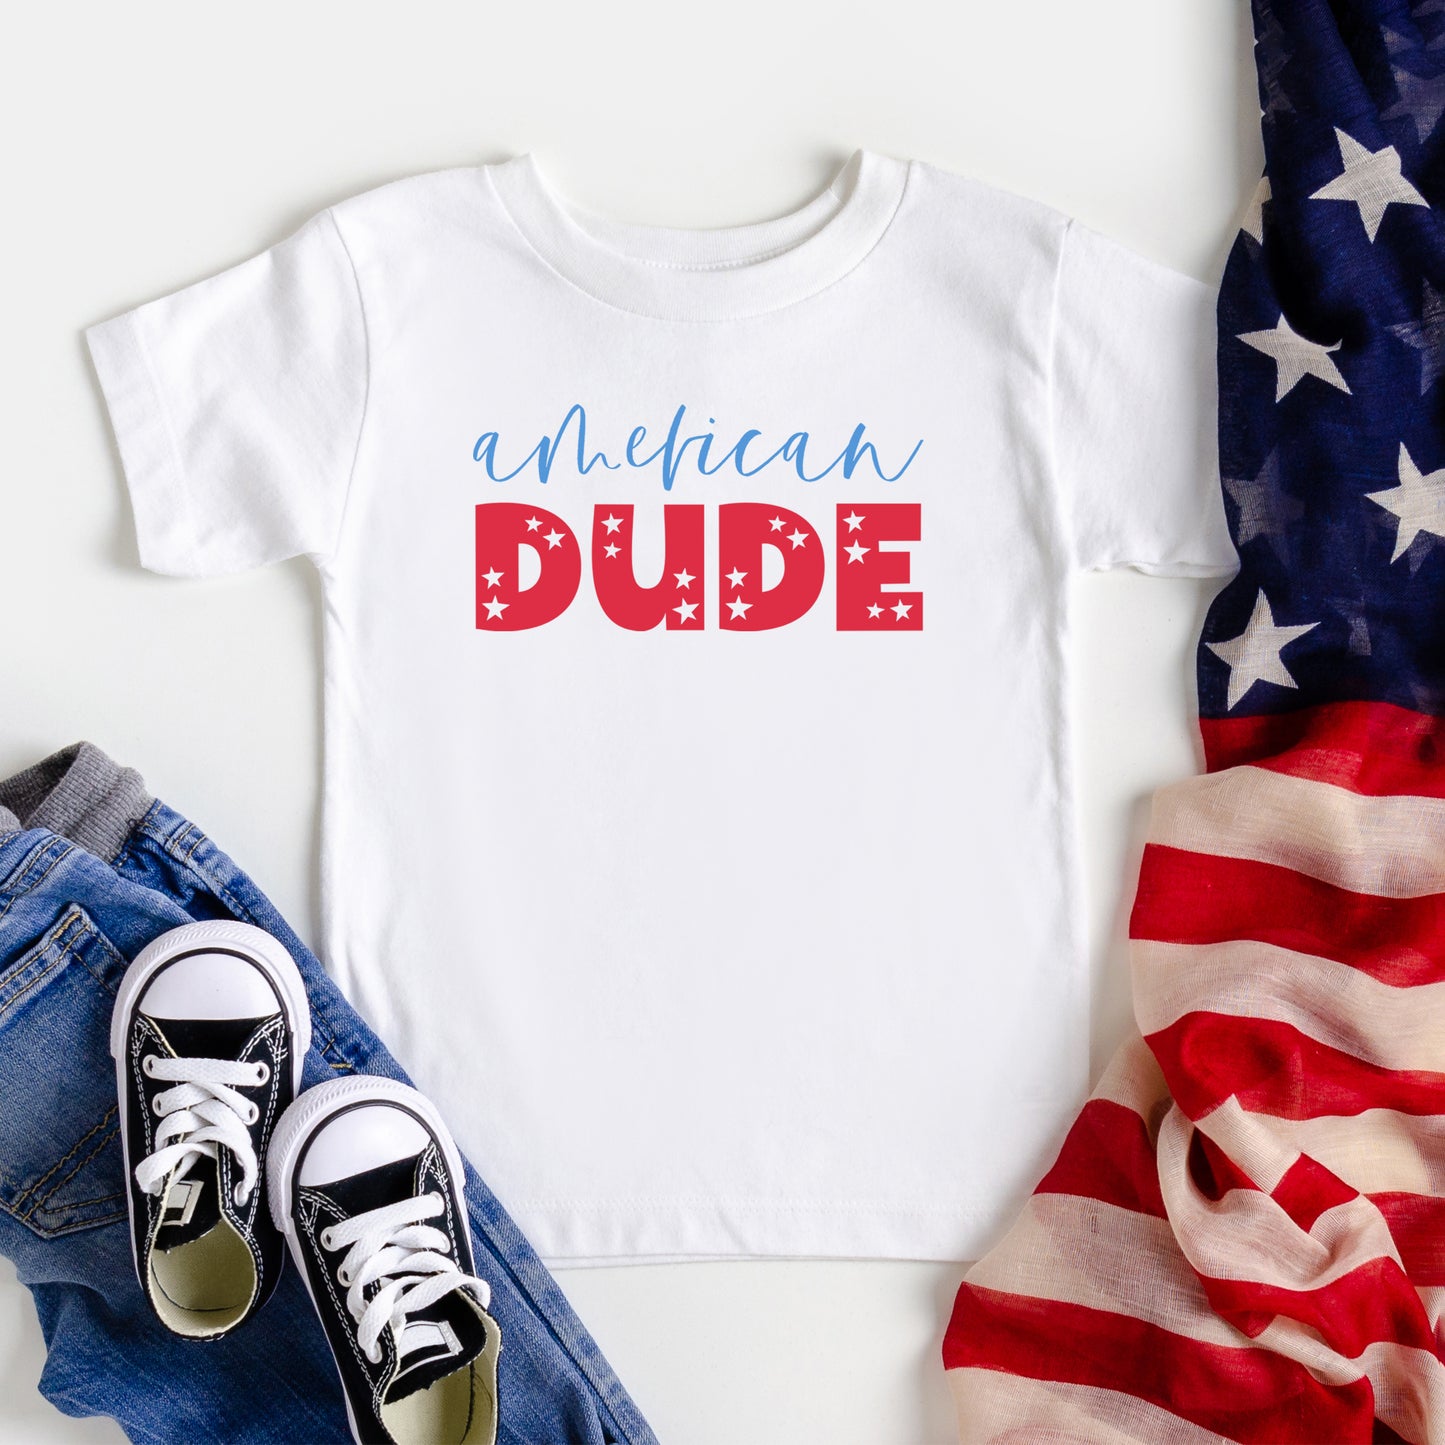 American Dude Pastel | Toddler Short Sleeve Crew Neck